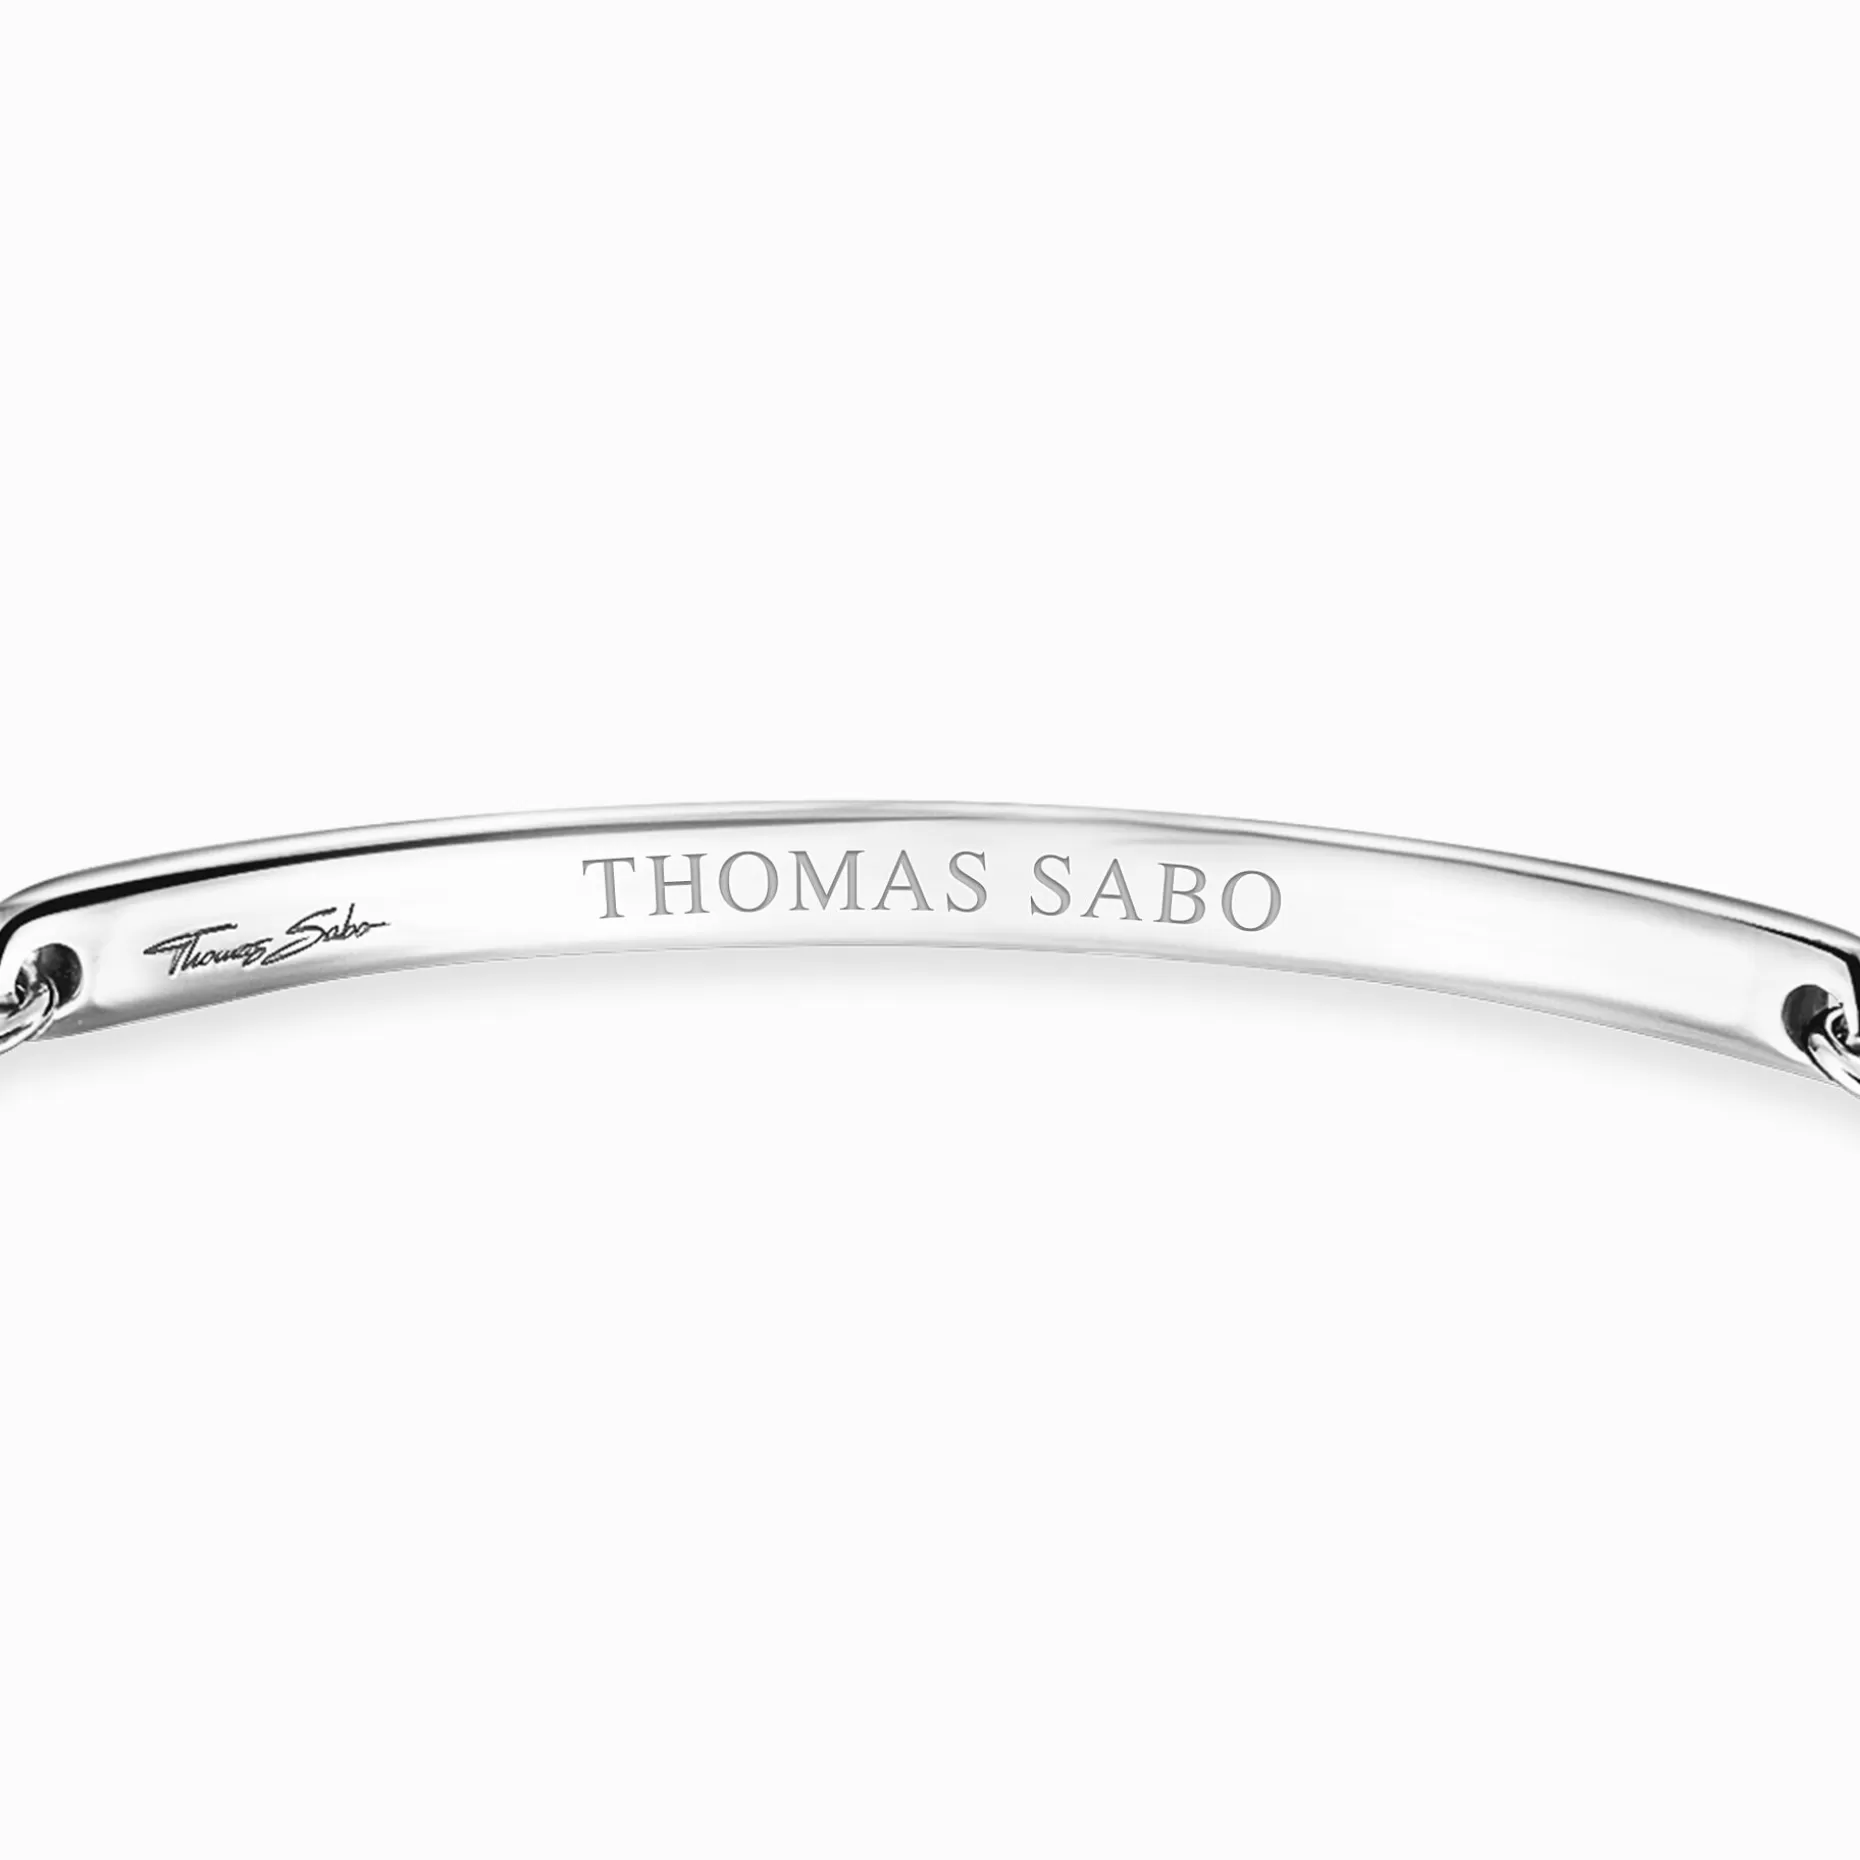 THOMAS SABO Bracelet classic silver-coloured Best